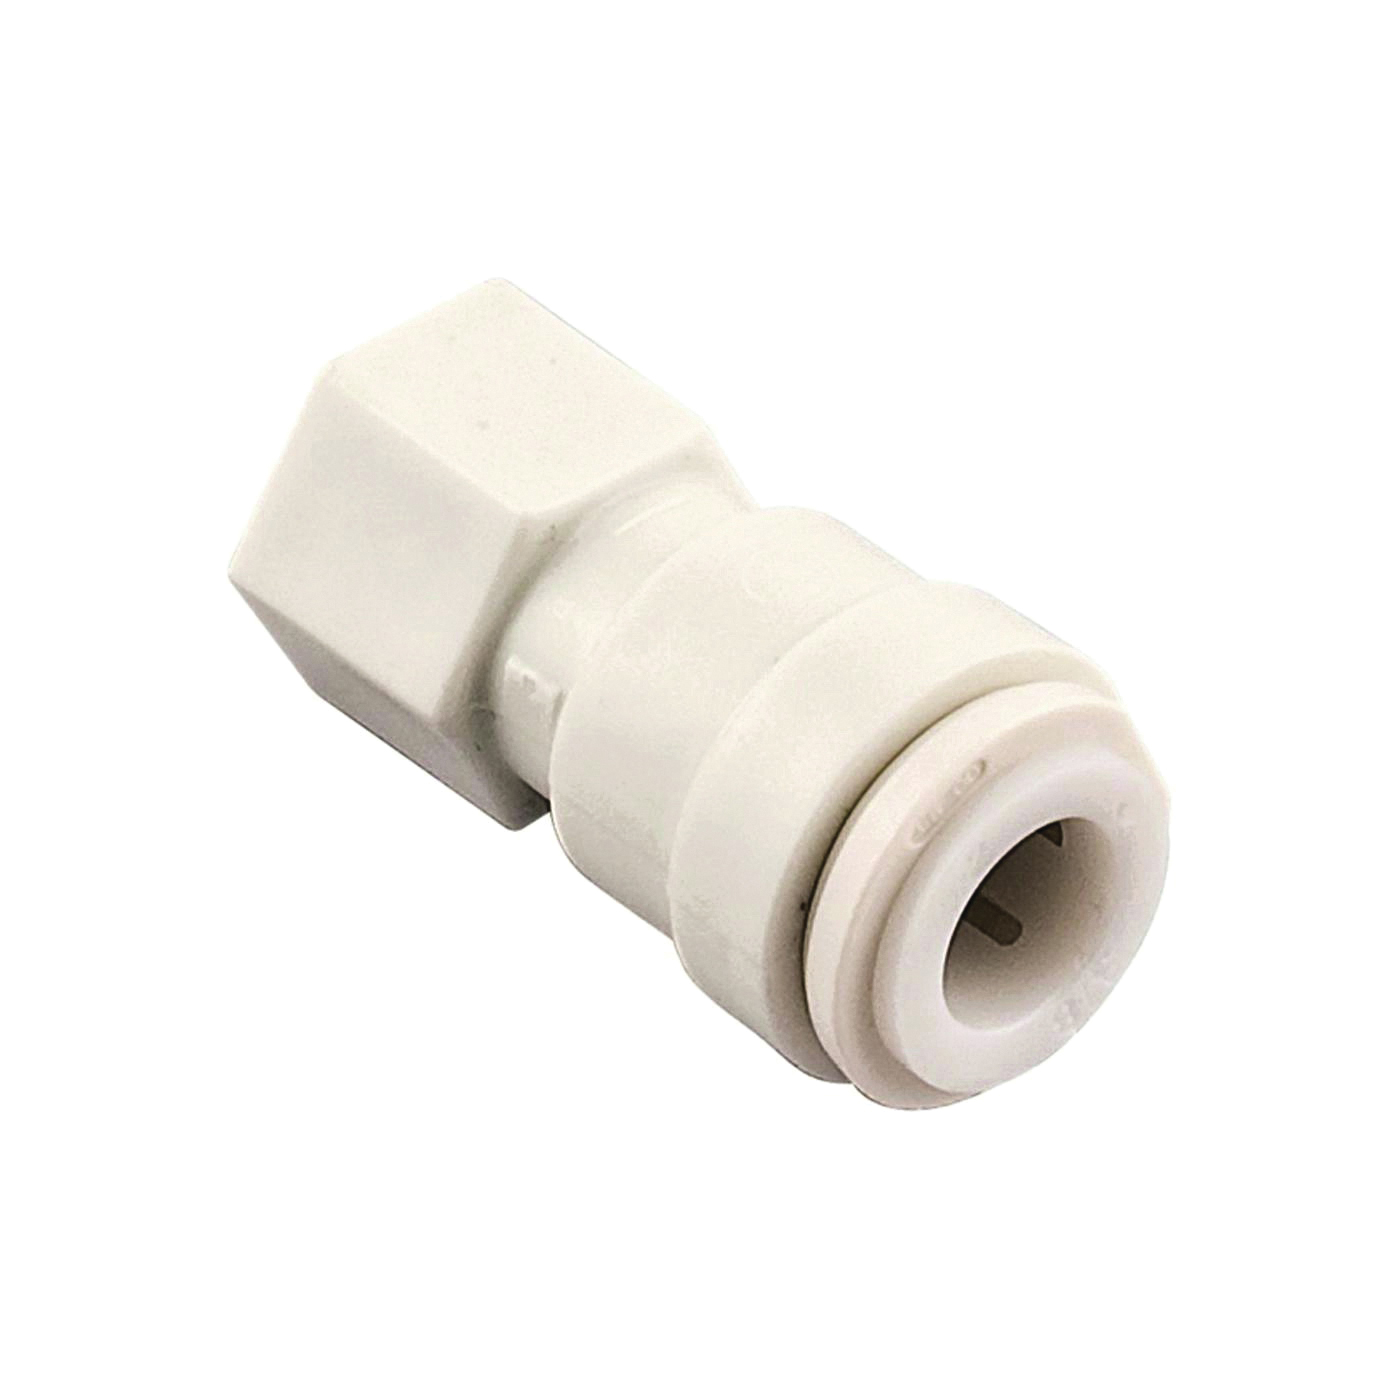 PL-3060 Pipe Adapter, 1/4 in, Tube x FIP, Plastic, 150 psi Pressure